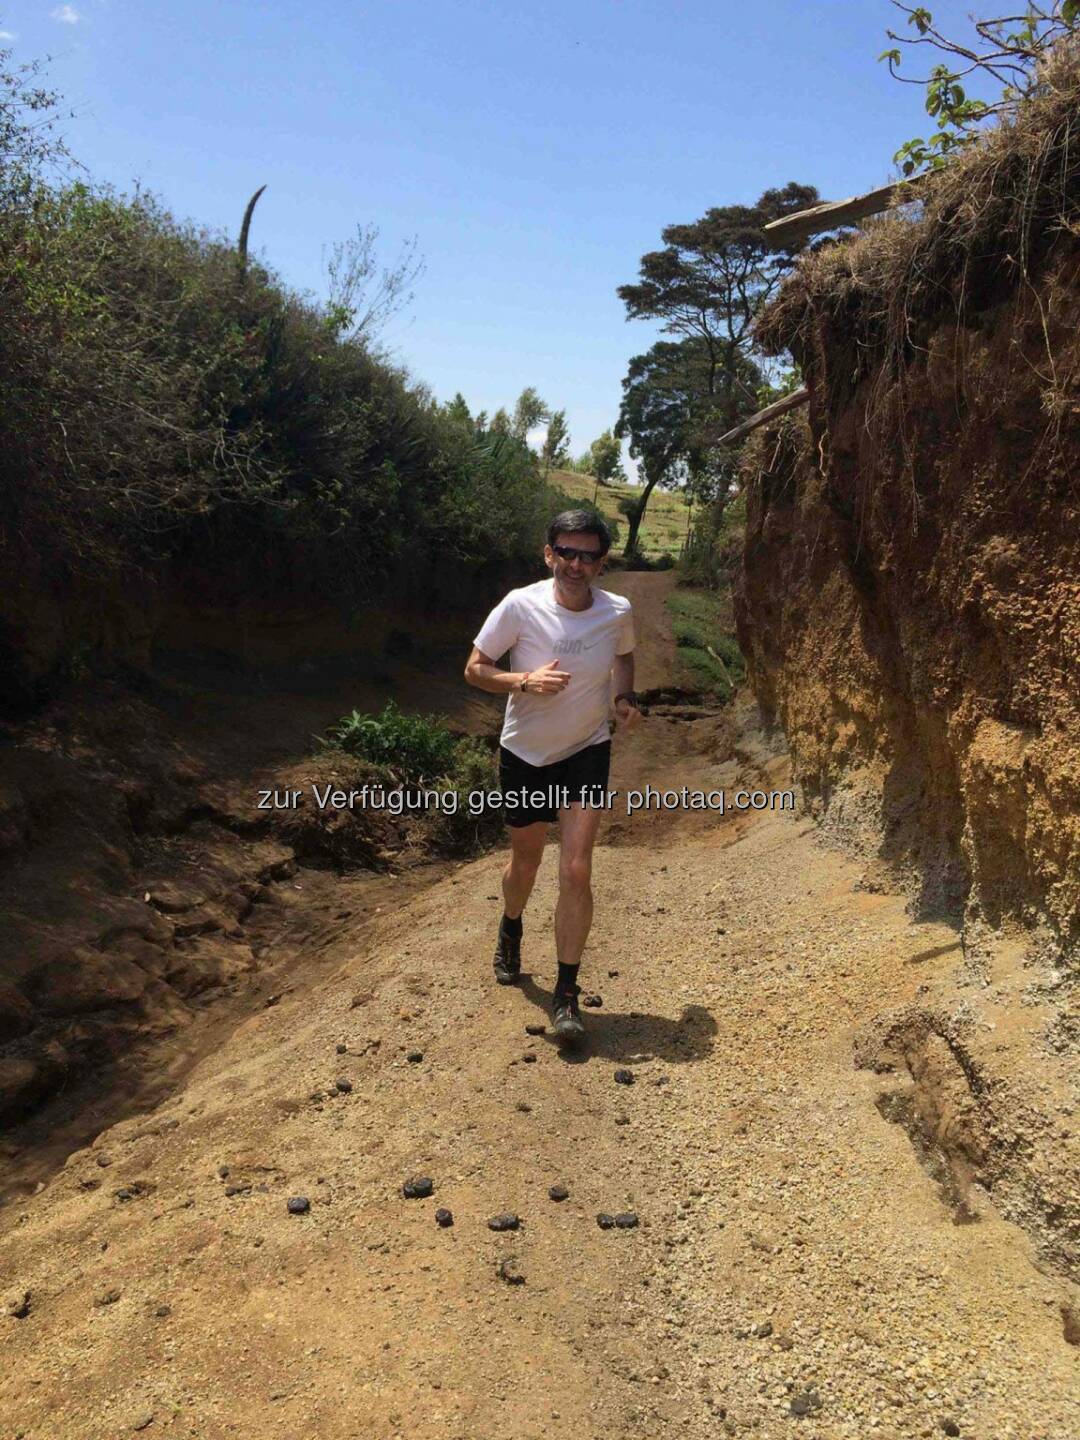 Thomas Kratky, Laufen in Kenia